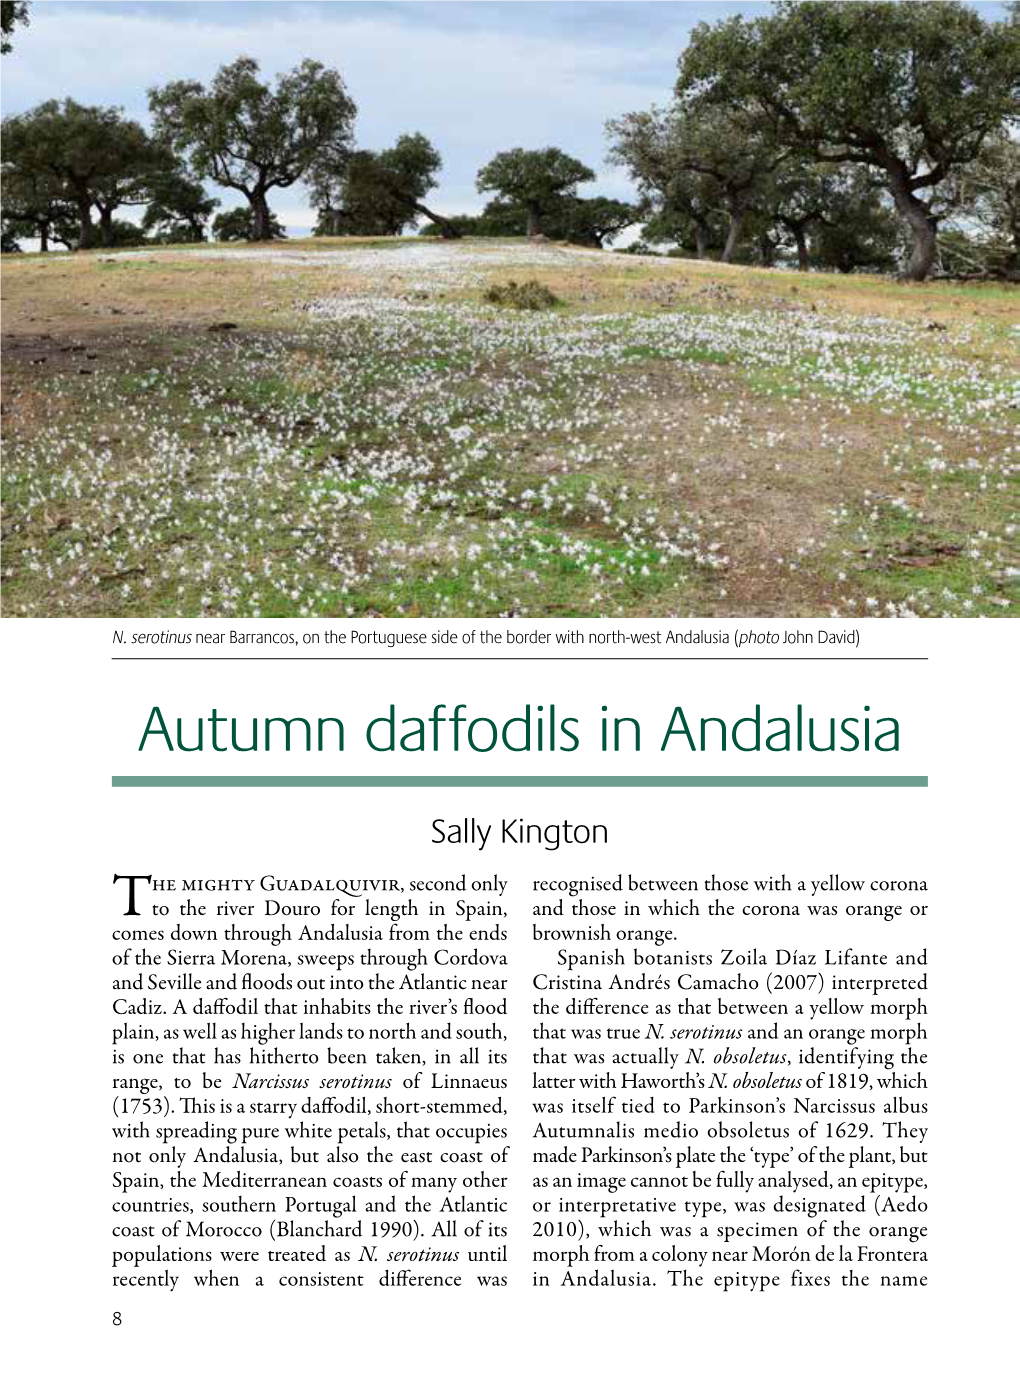 Autumn Daffodils in Andalusia